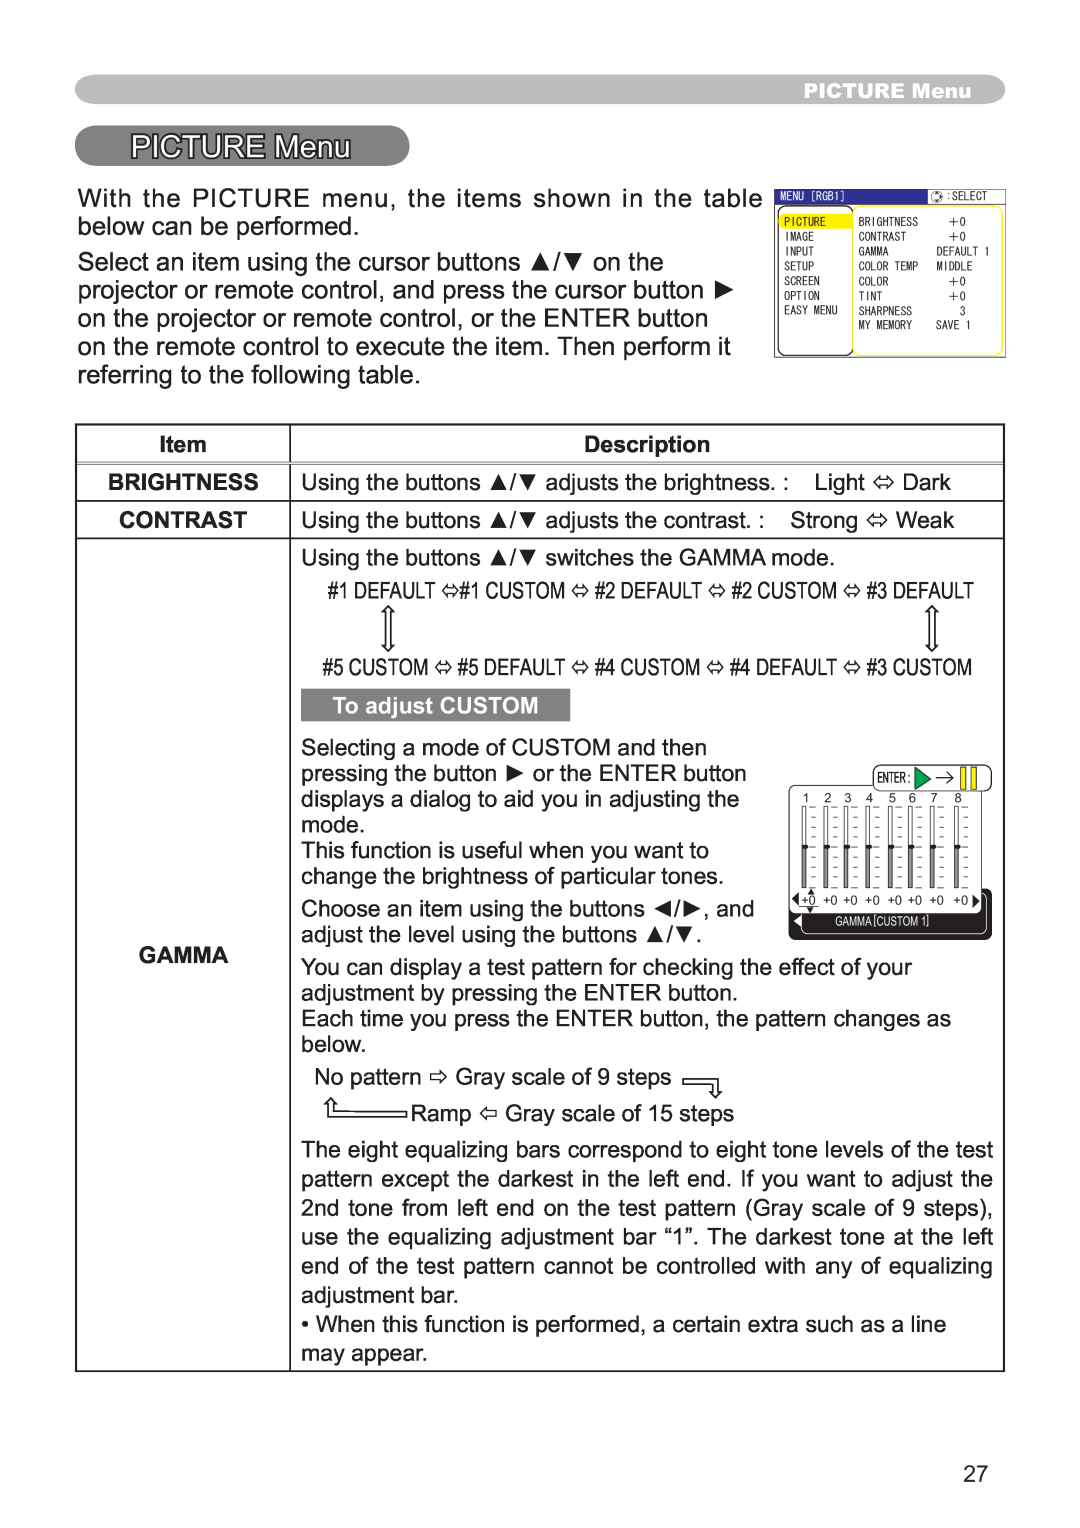 Hitachi CP-X251 user manual PICTURE Menu, Description, Brightness, Contrast, To adjust CUSTOM, Gamma 